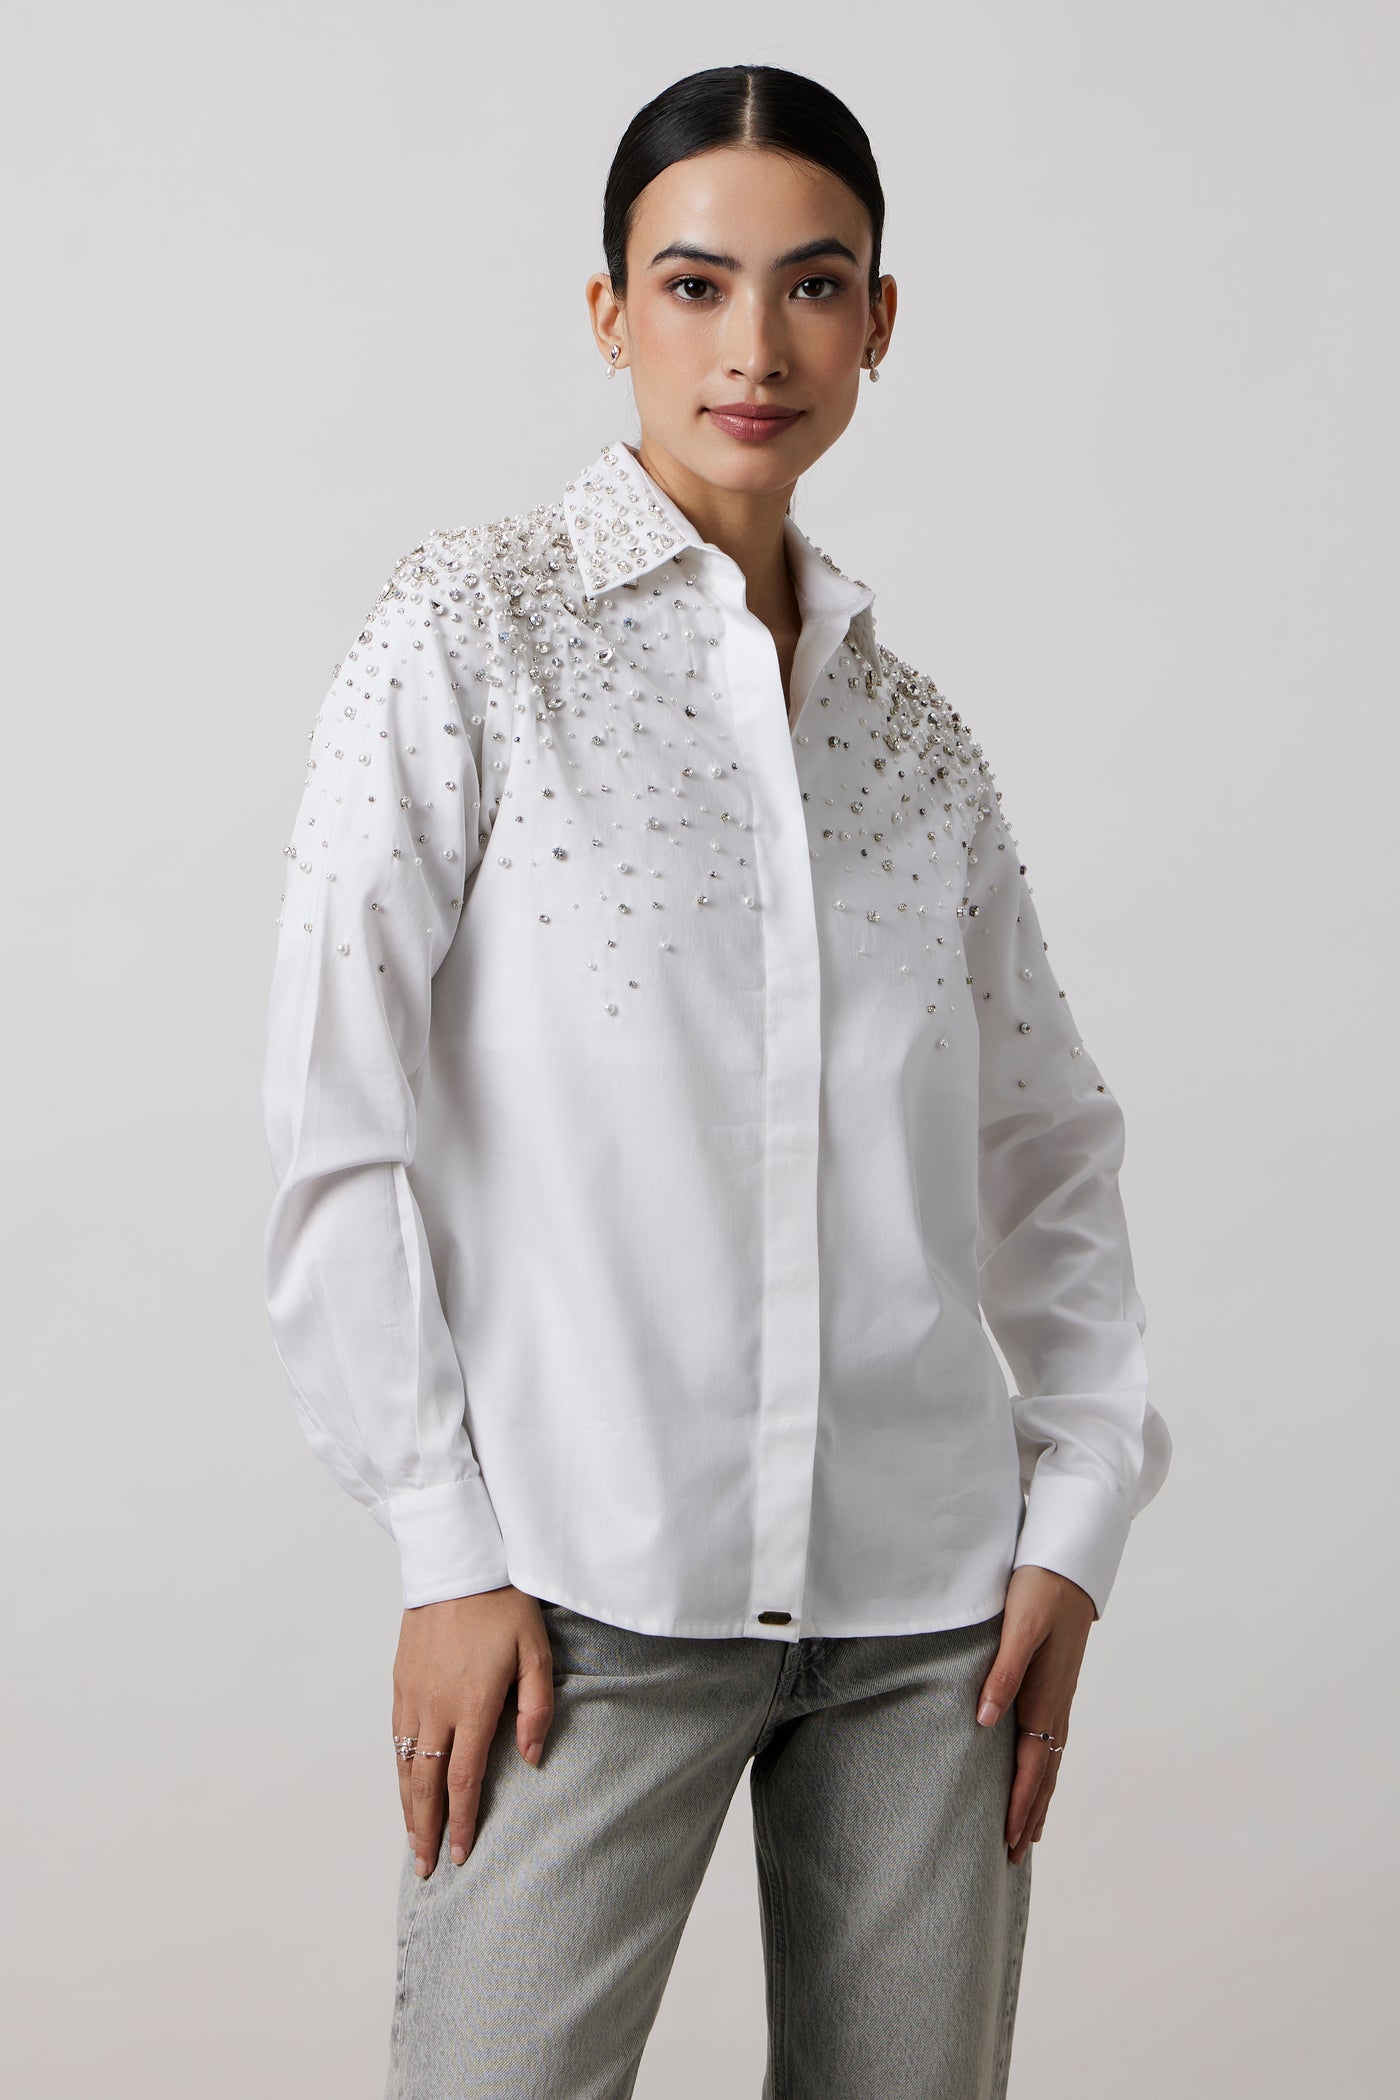 White Encrusted Pearl Swarovski Shirt